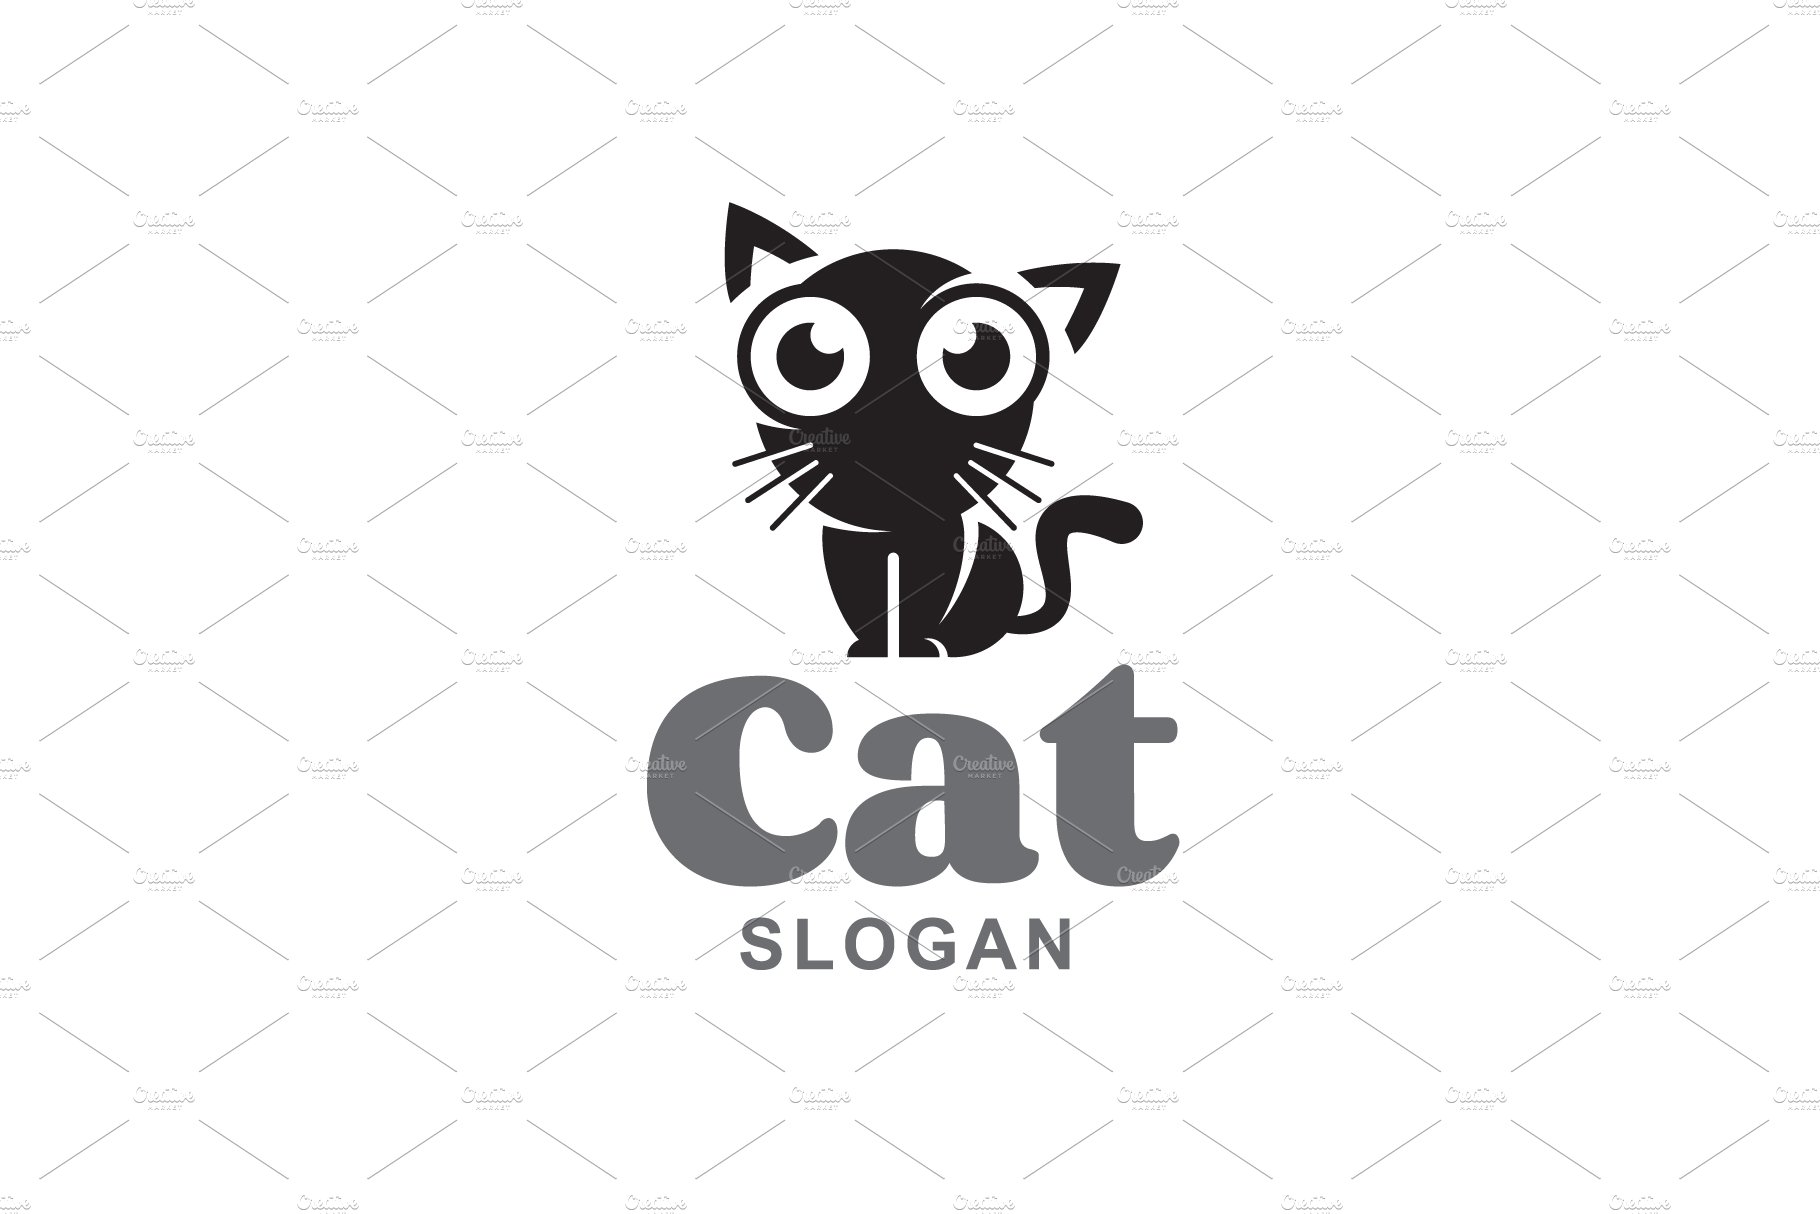 Share more than 164 black cat logo super hot